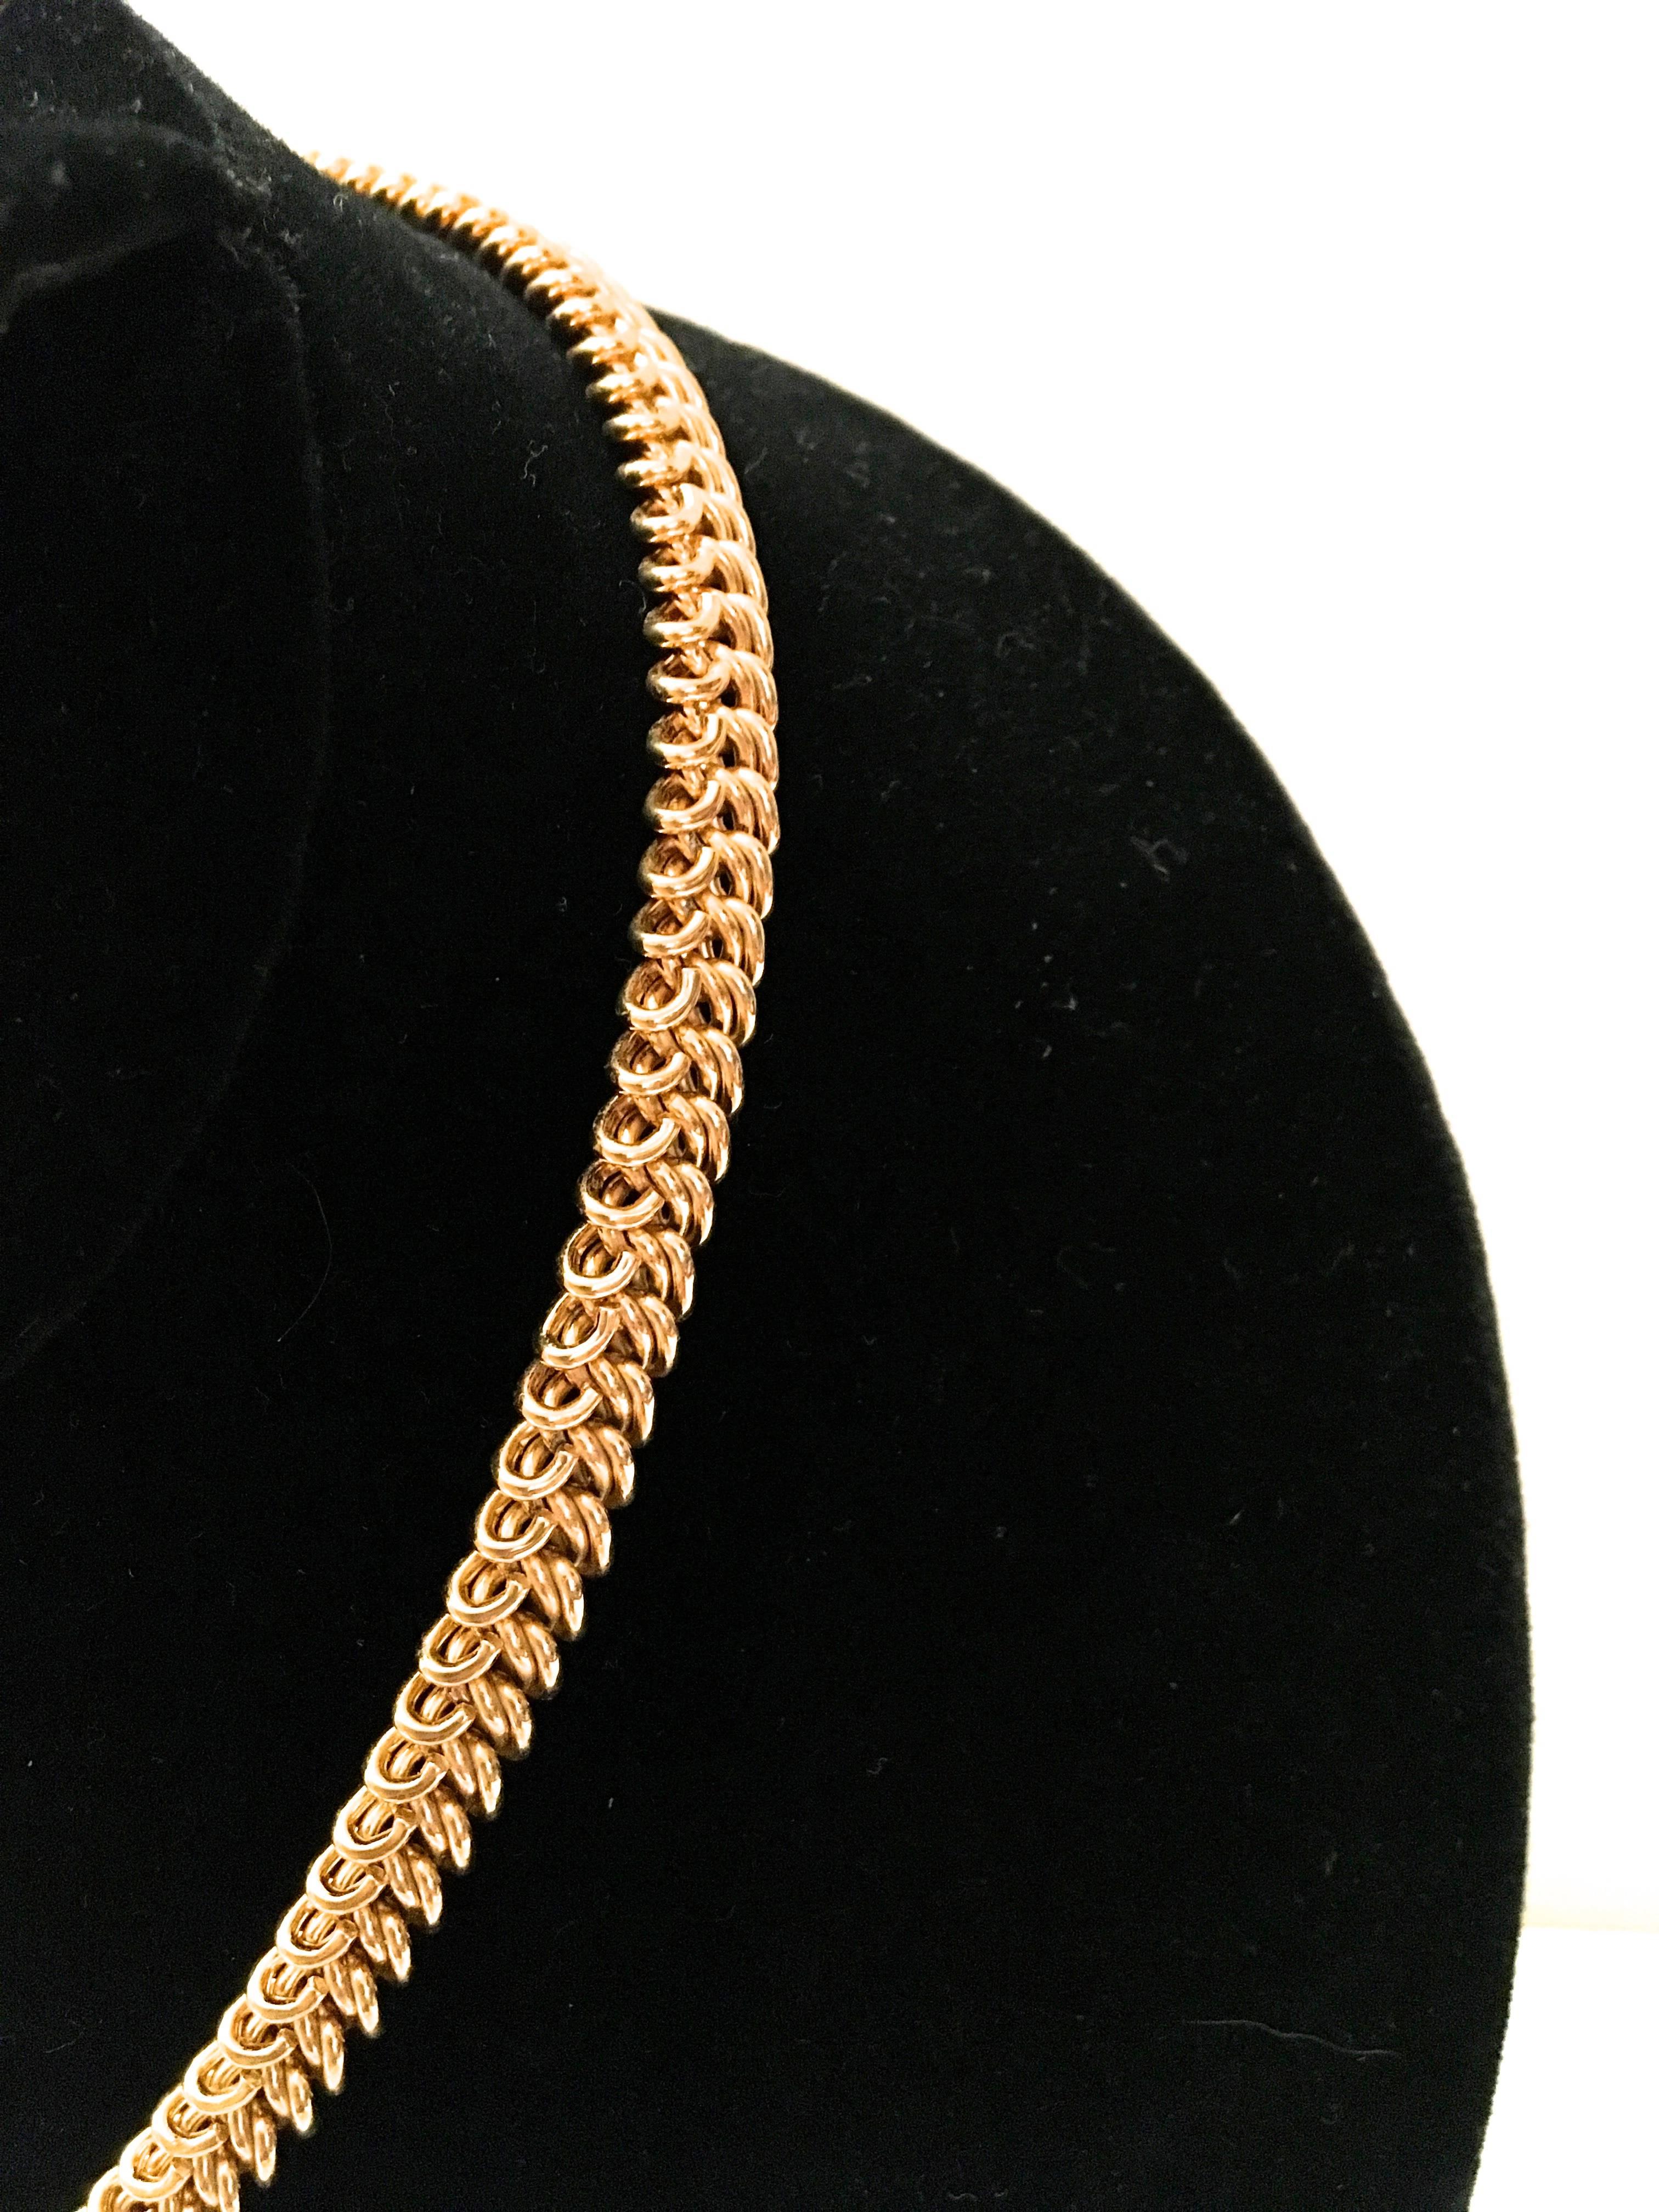 Women's Balenciaga Necklace -Gold Tone Metal w/ Pendant - 1980s For Sale